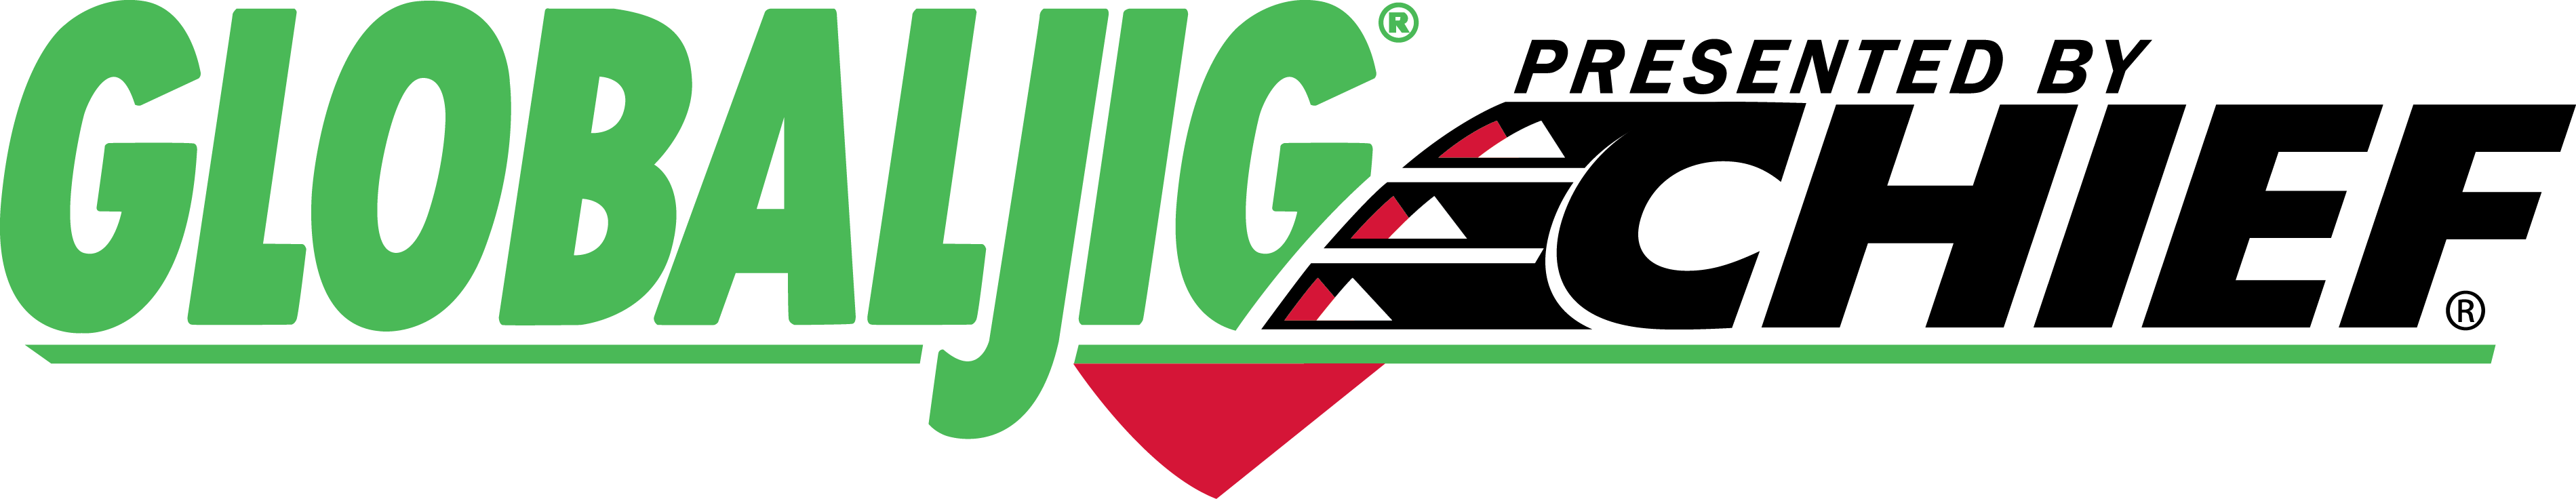 Globaljig_Logo_Standard